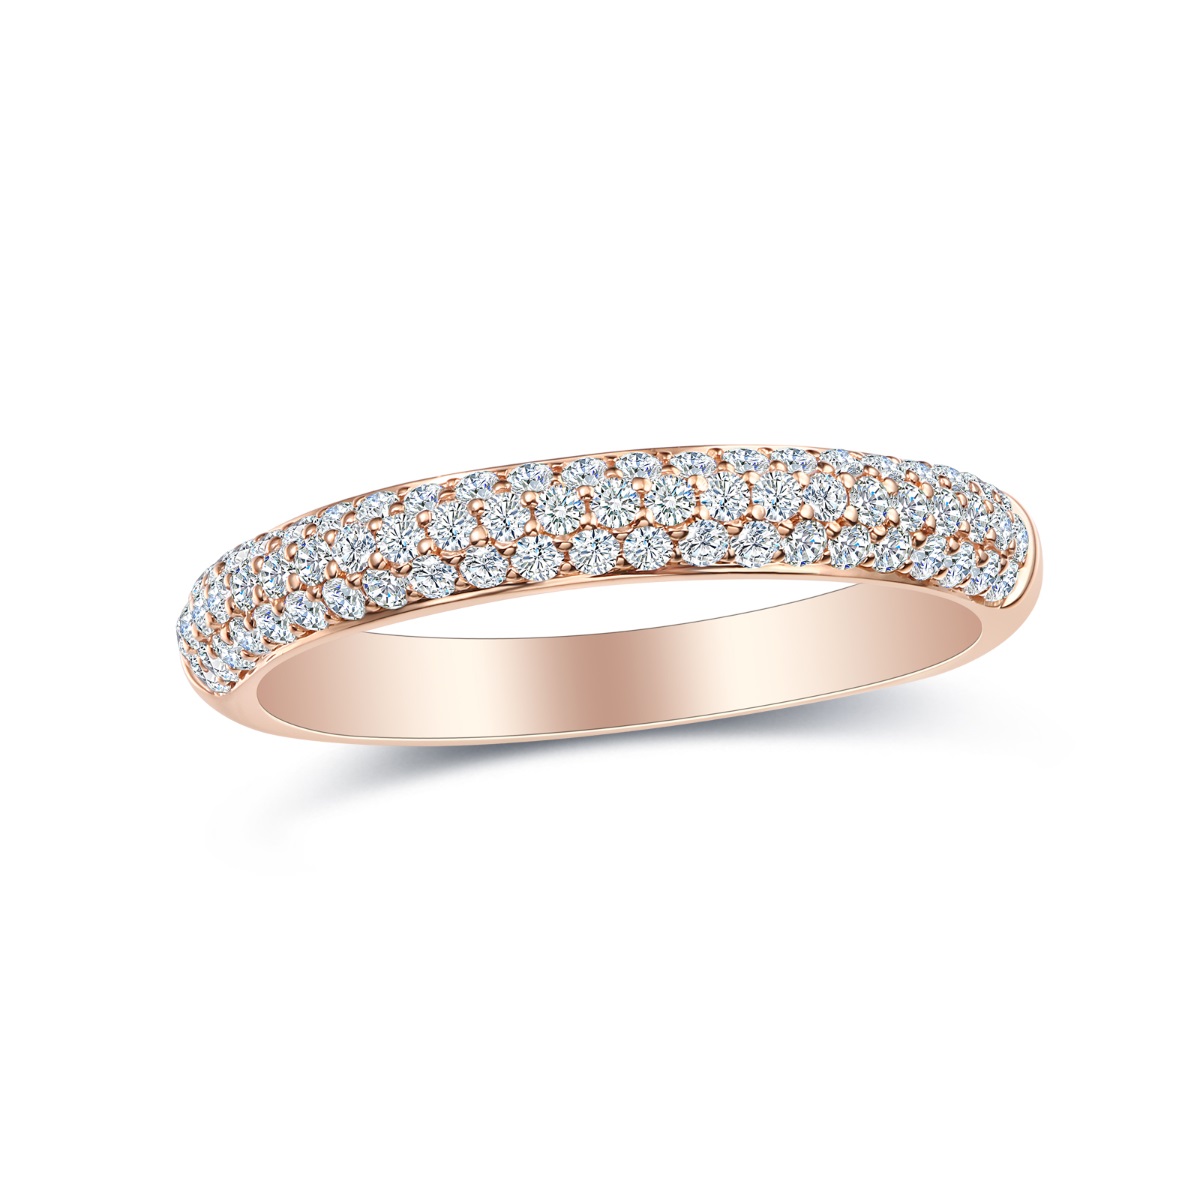 R35354WHT – 18K Rose Gold Diamond Ring, 0.52 TCW